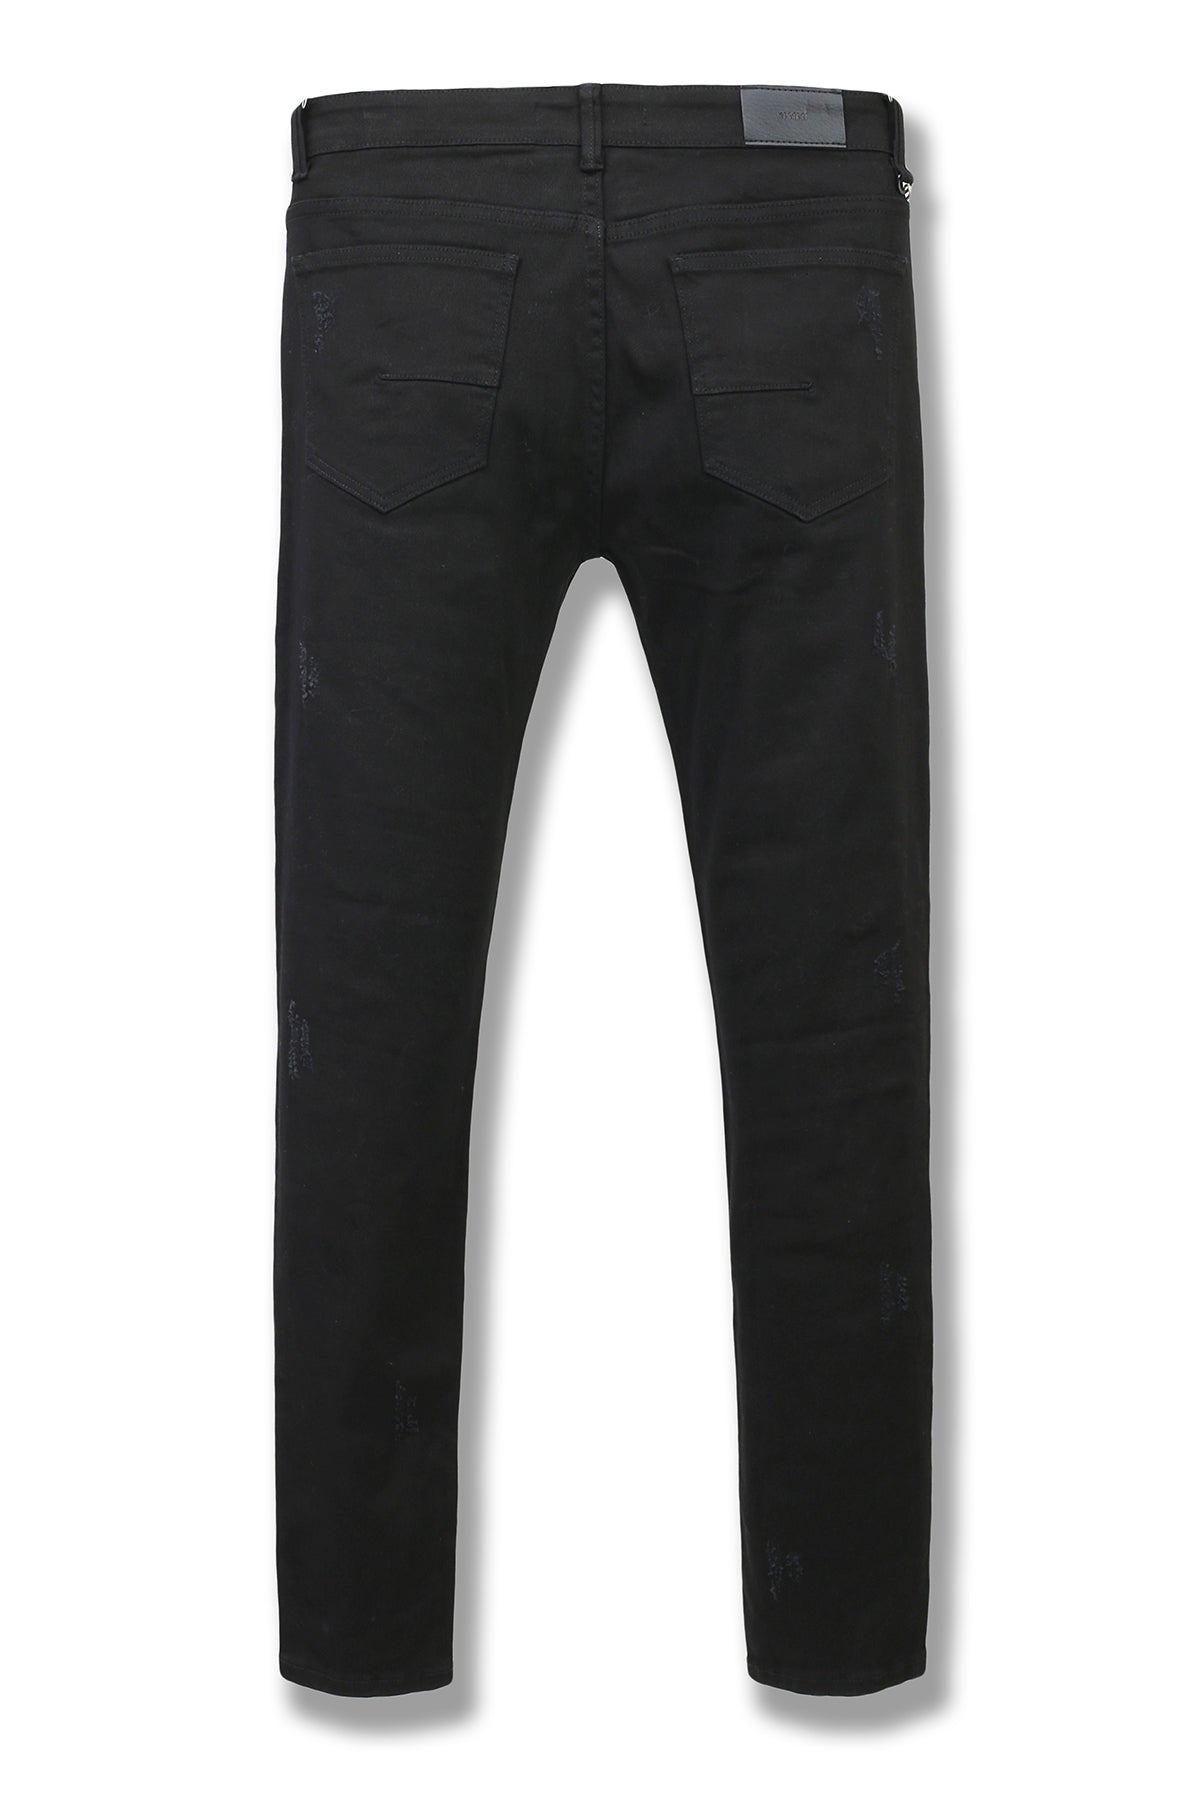 Stitch Pants (Black) (6612543733862)